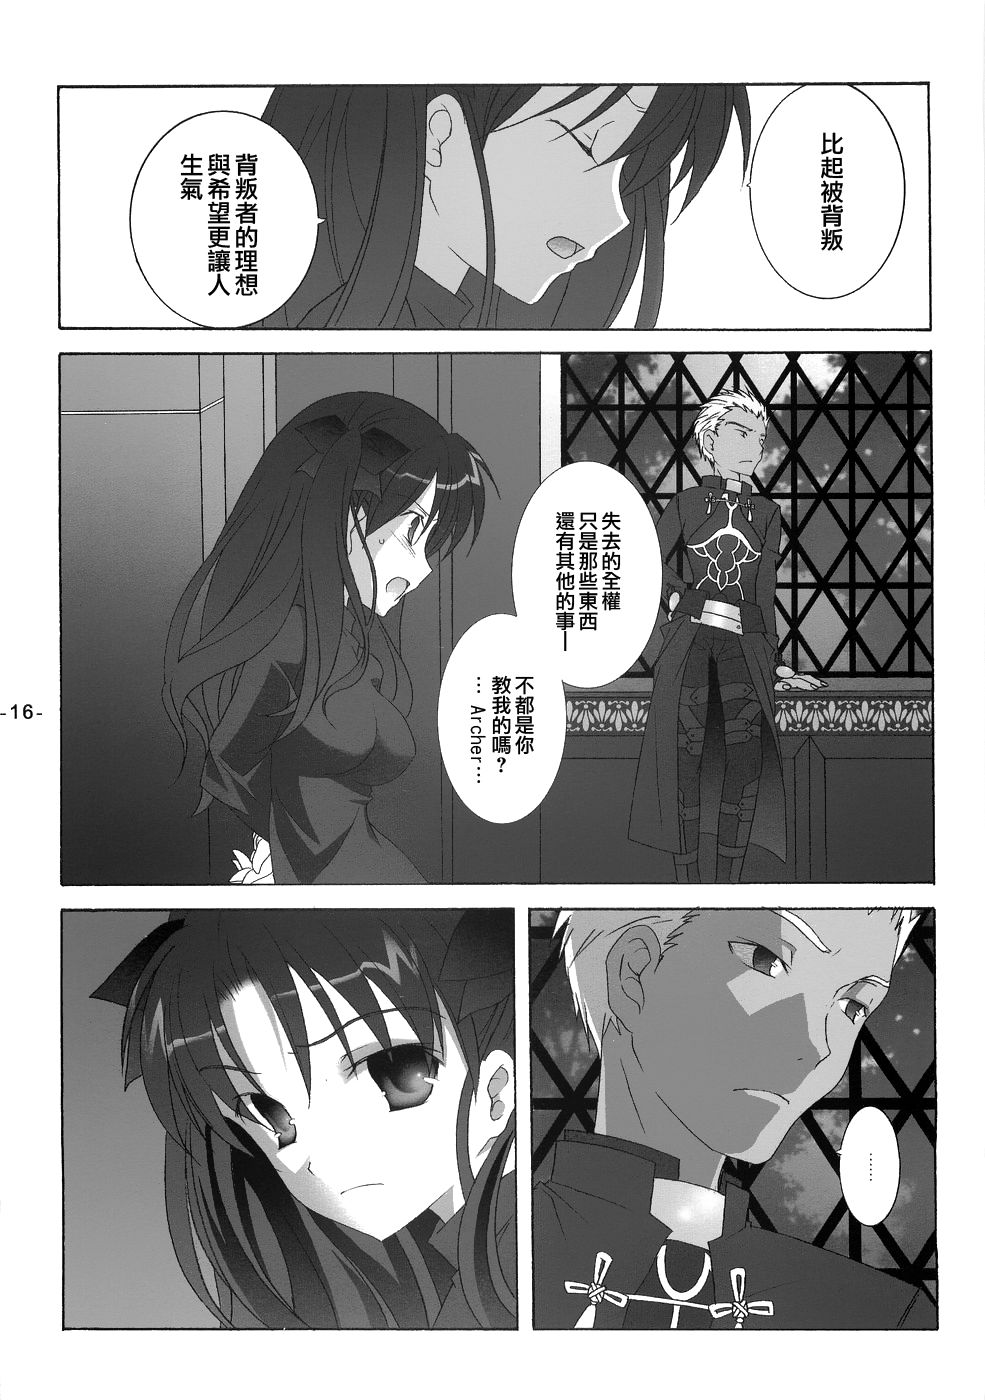 (CR35) [Tenjikuya (Mochizuki Nana)] Another Girl II (Fate/stay night) [Chinese] (Cレヴォ35) [天軸屋 (望月奈々)] Another Girl II (Fate/stay night) [中国翻訳]